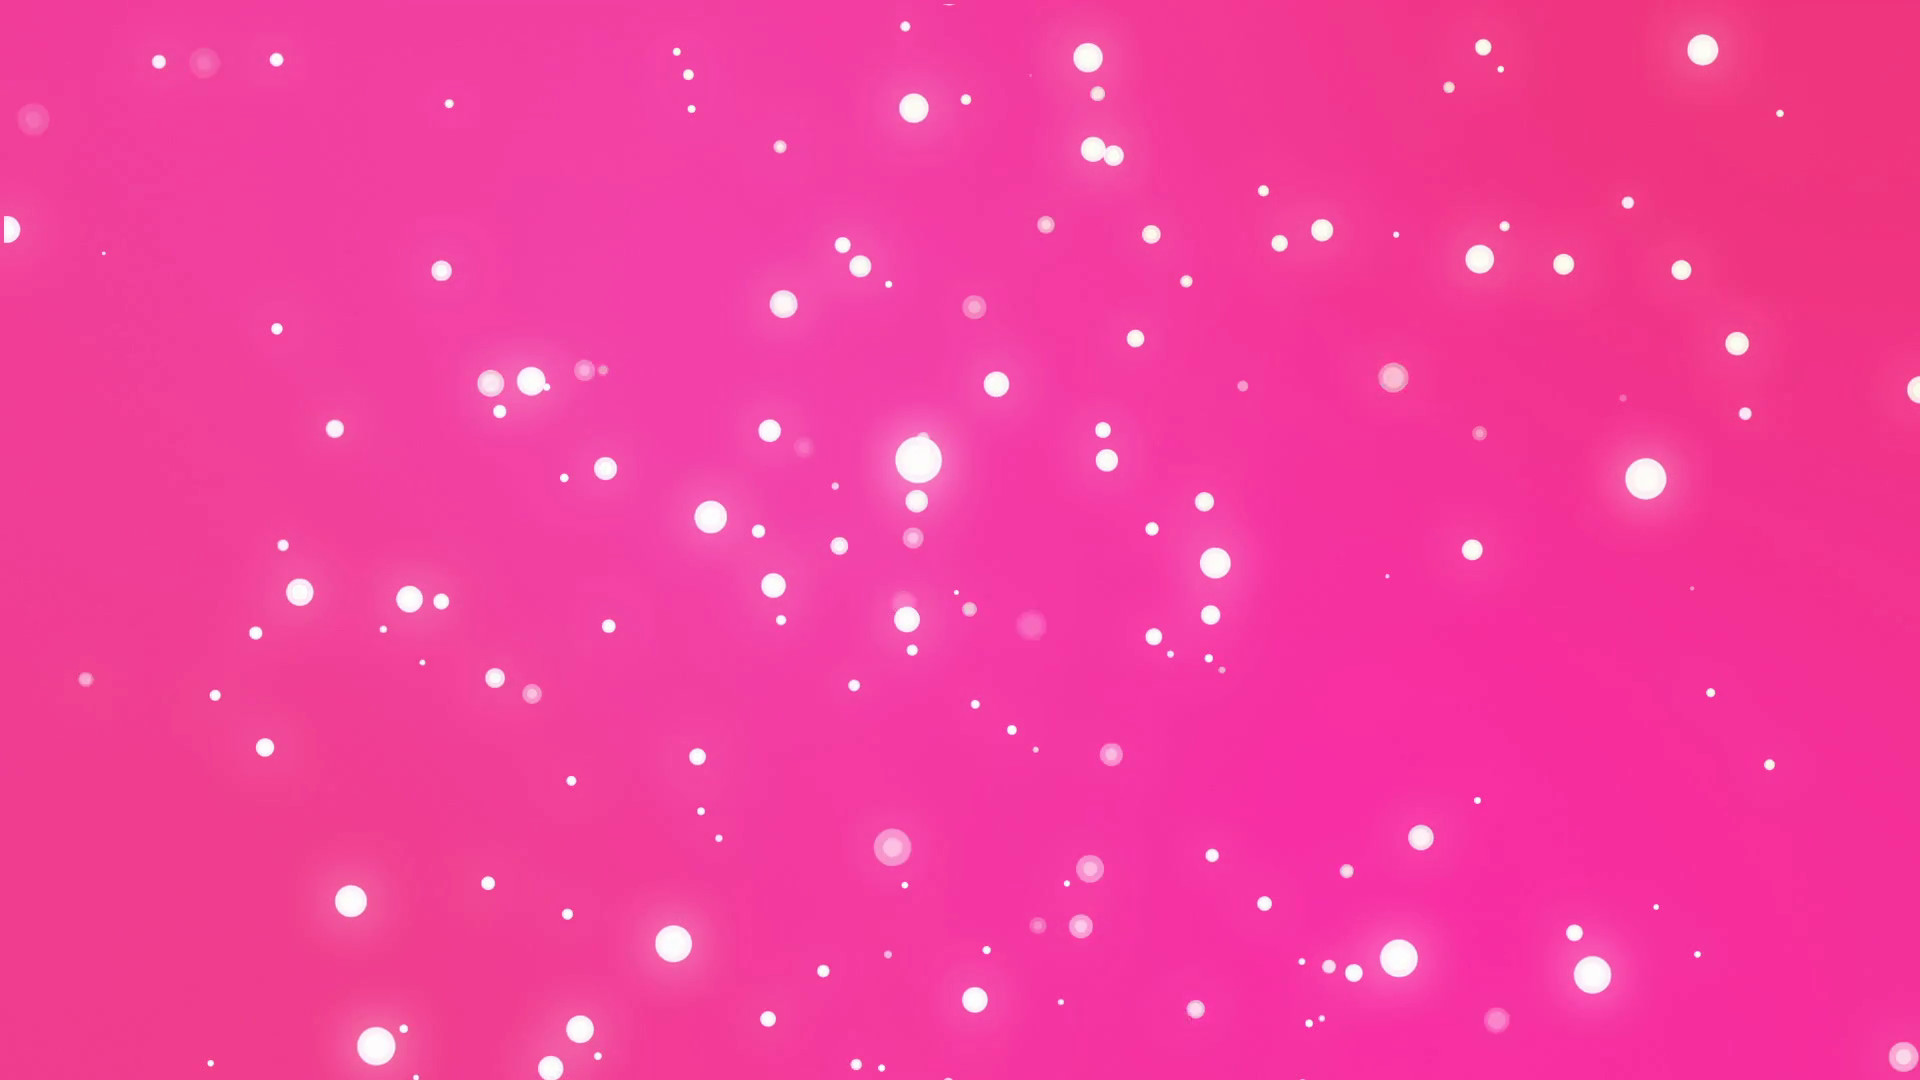 Cute Pink Wallpaper HD Download Free 4.